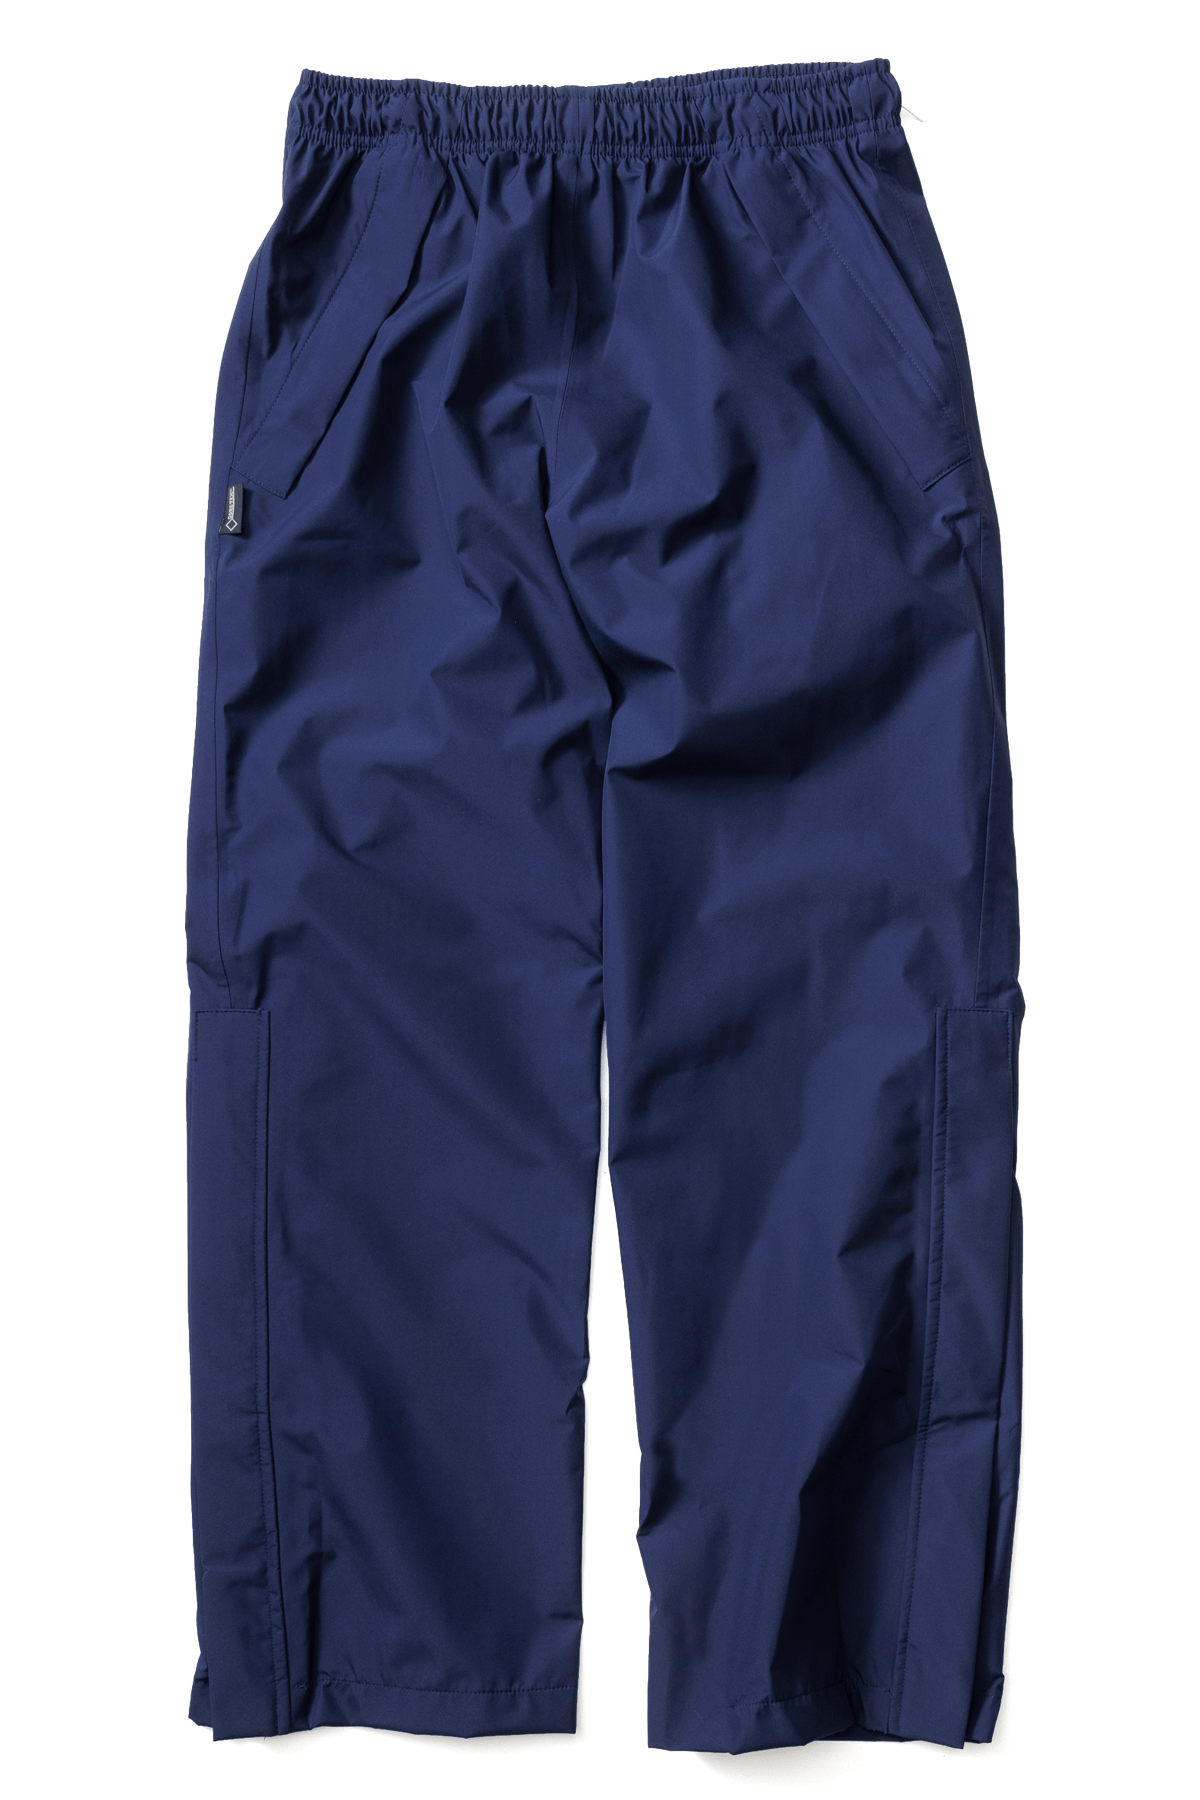 BOATHOUSE Men's GORE-TEX© Pants Navy / X-Small